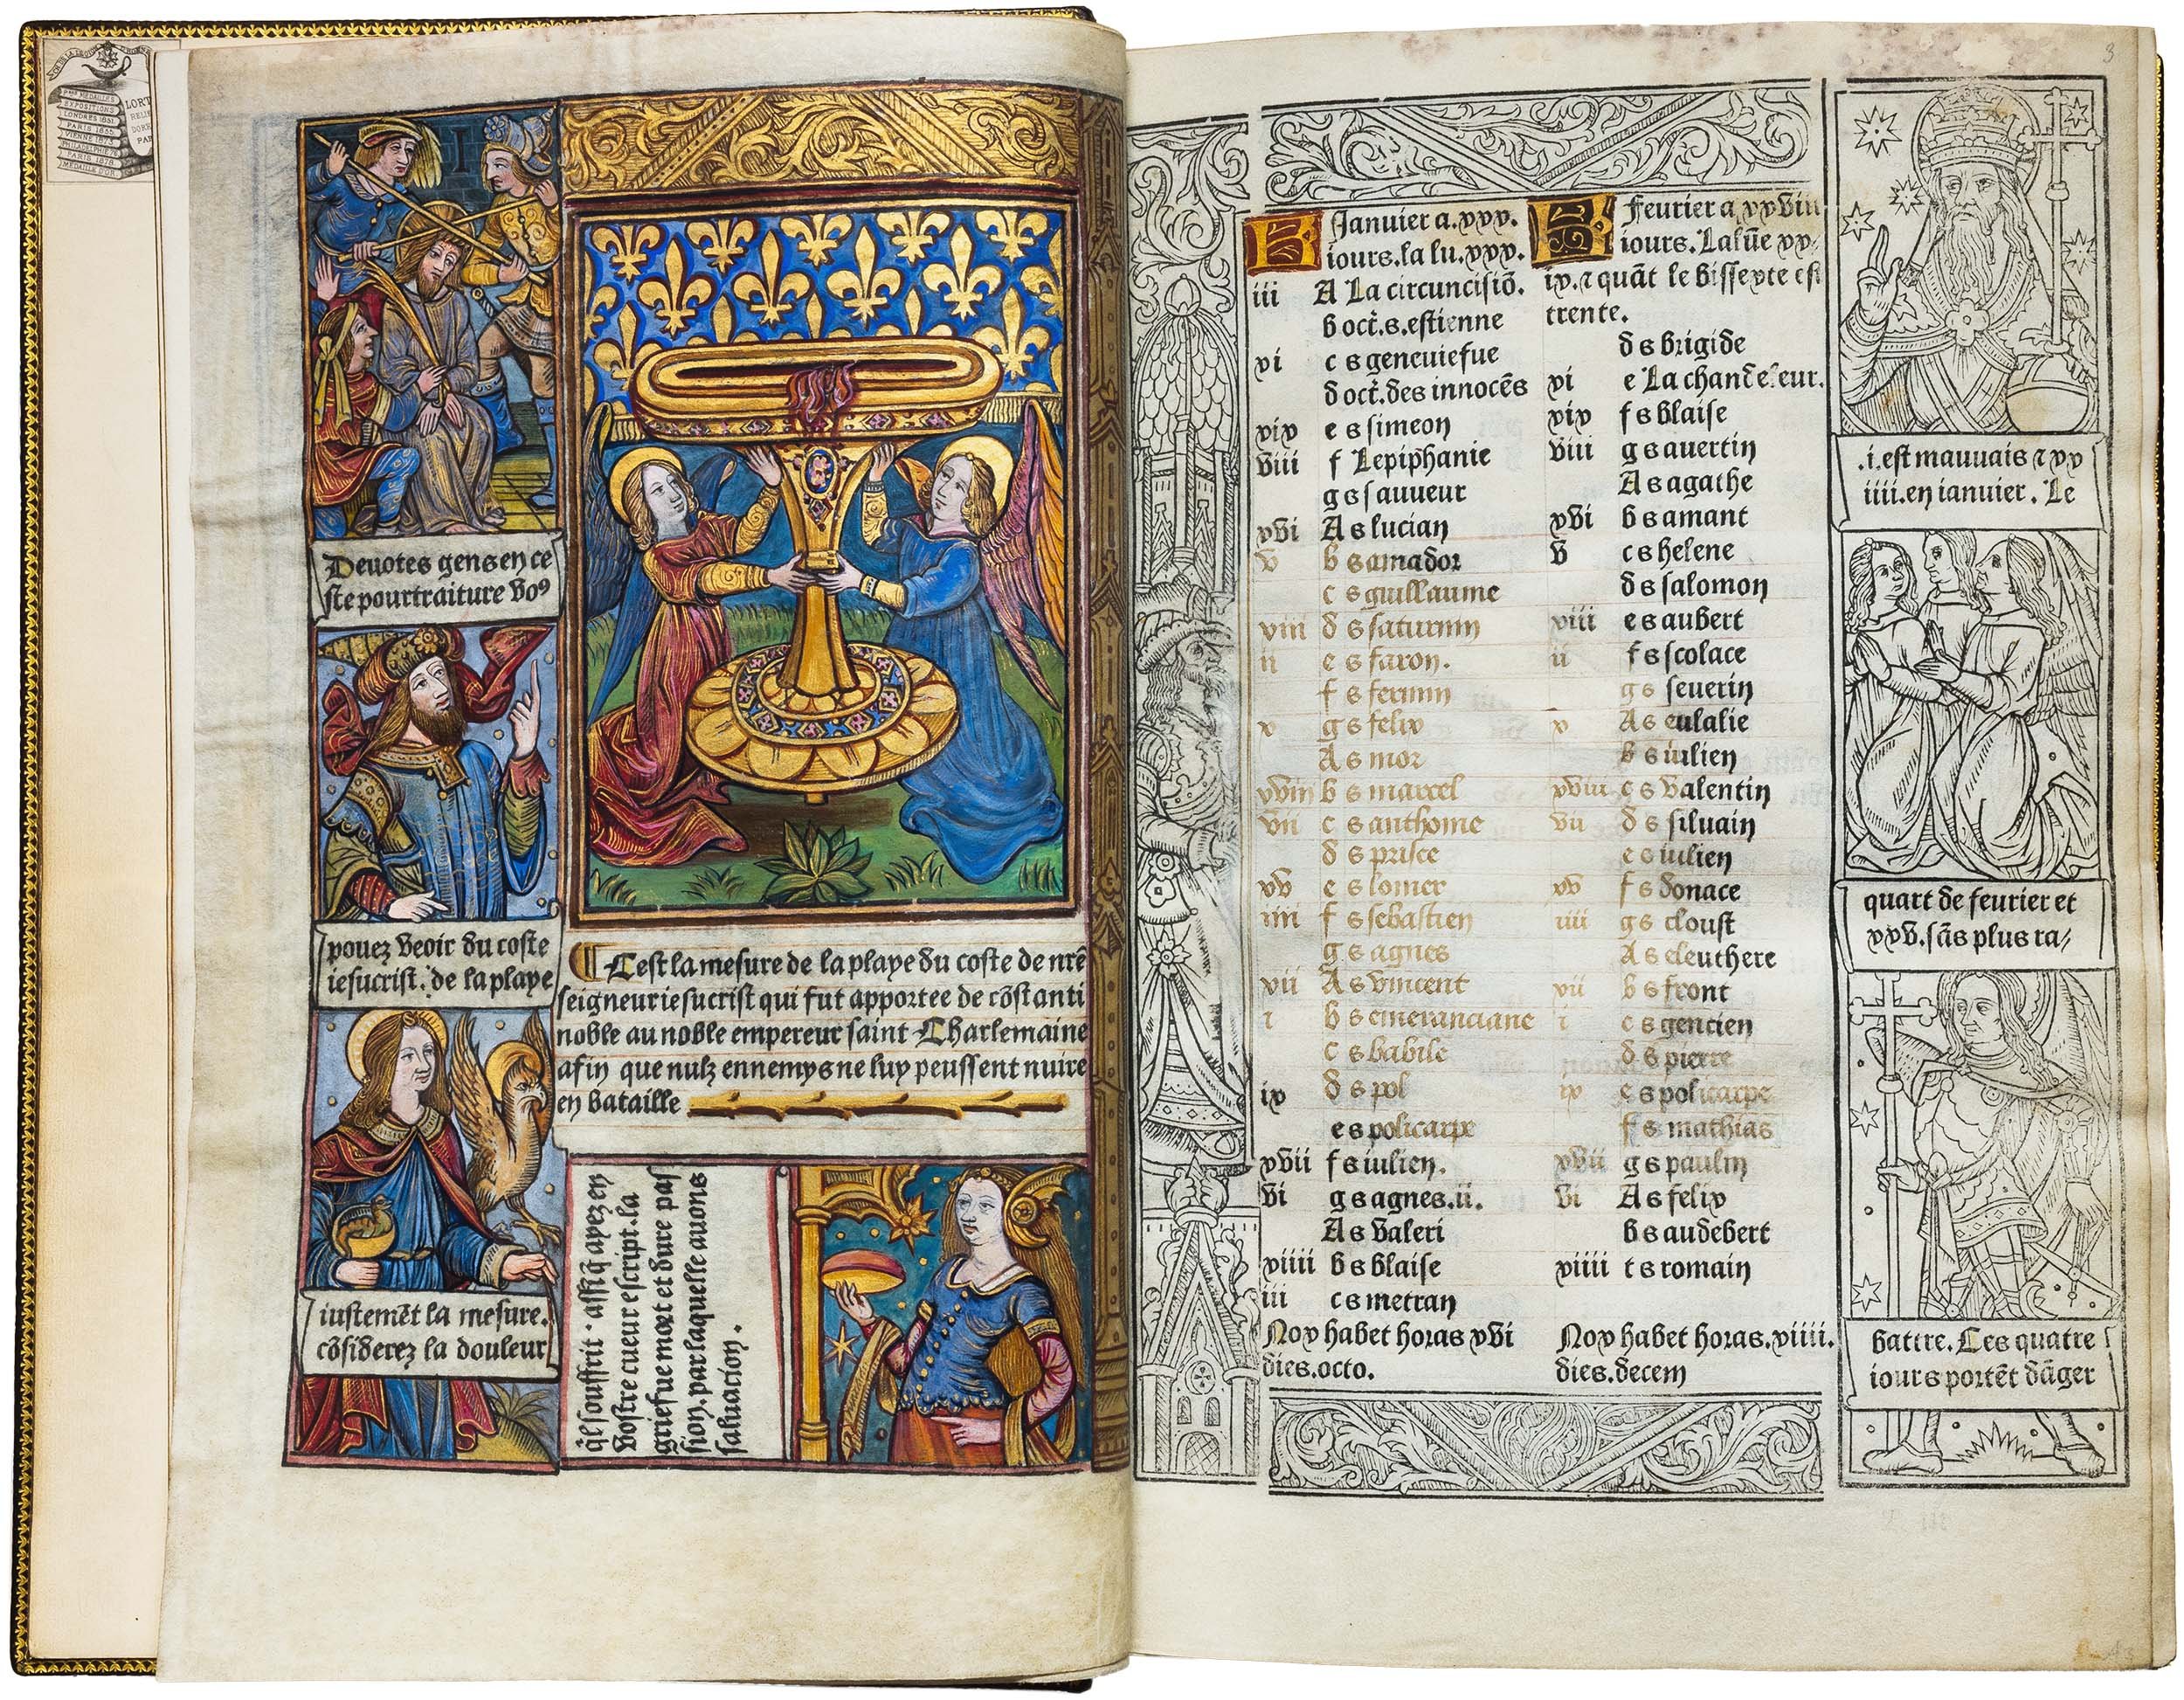 horae-bmv-20.8.1490-printed-book-of-hours-anne-de-beaujeu-de-france-grandes-heures-royales-05.jpg